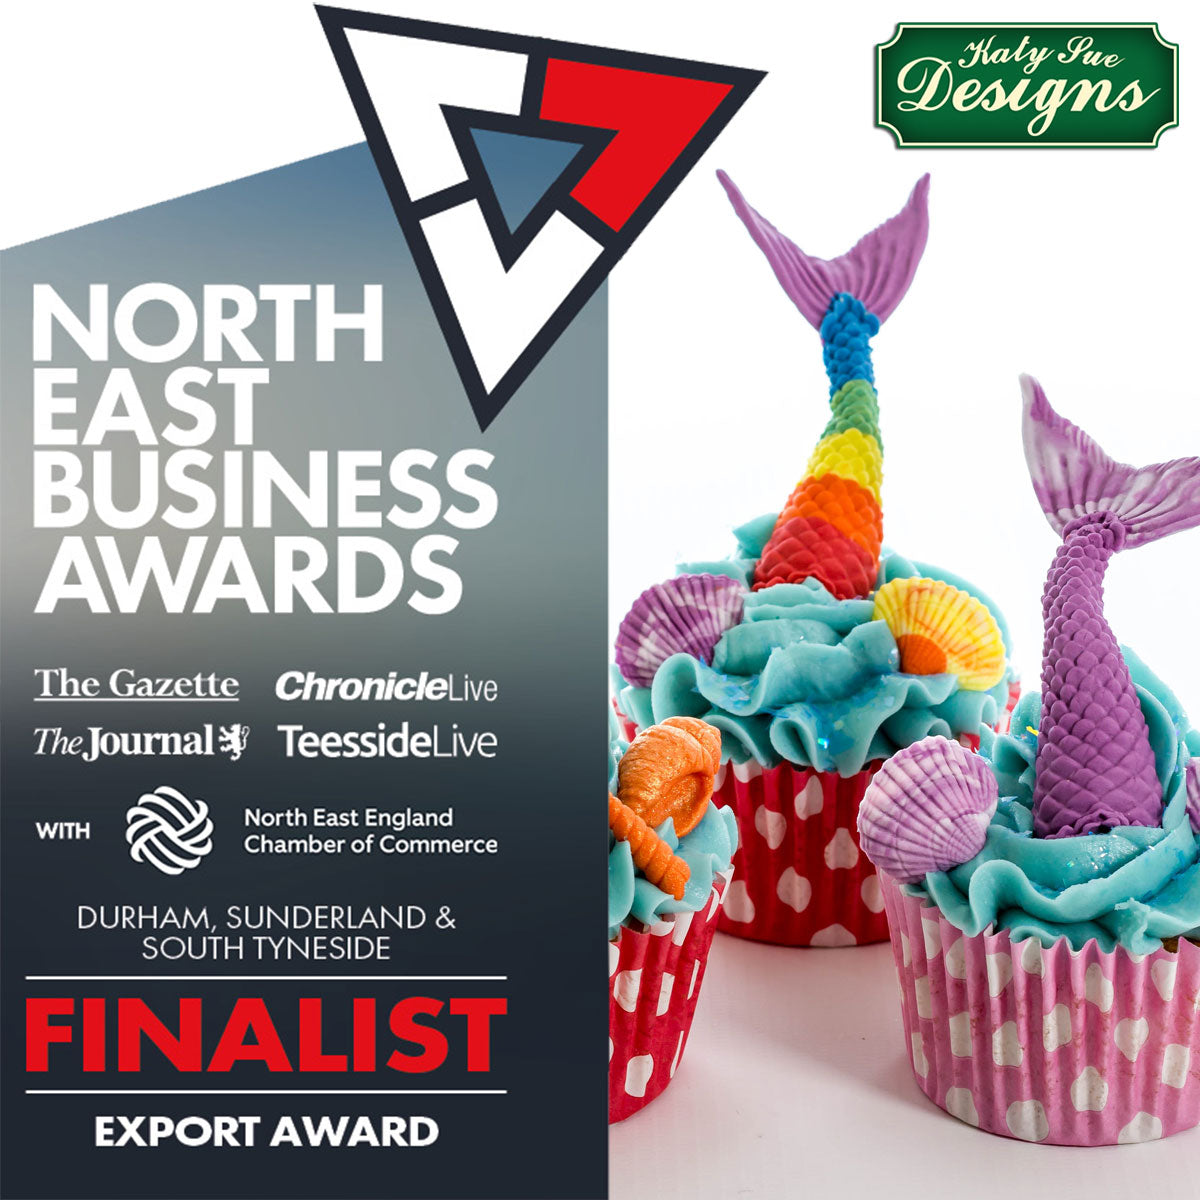 Cake Moulds Business awards